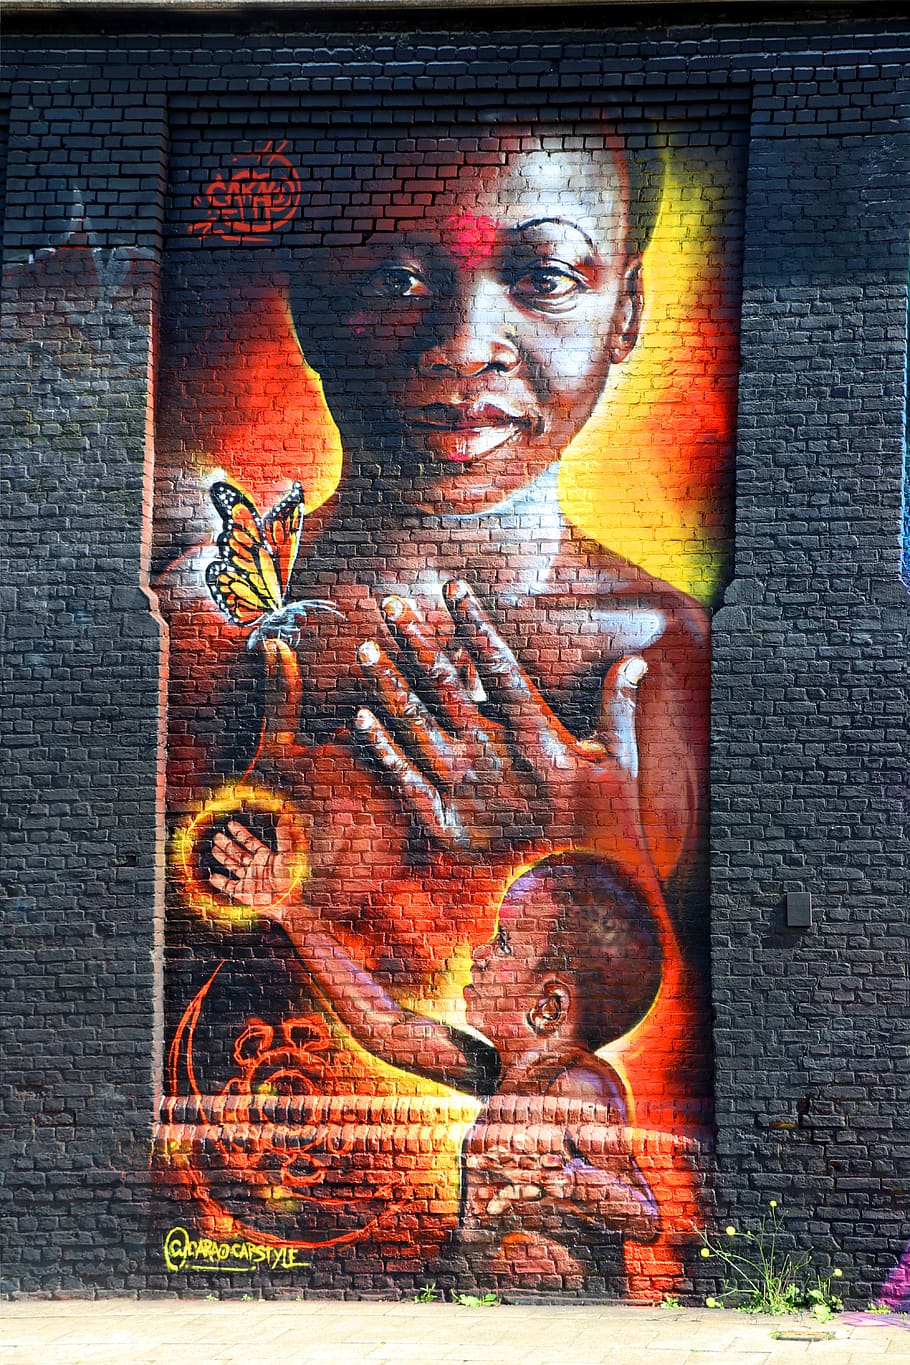 graffiti, street art, art, mural, graffiti art, graffiti wall, africa, woman, child, butterfly